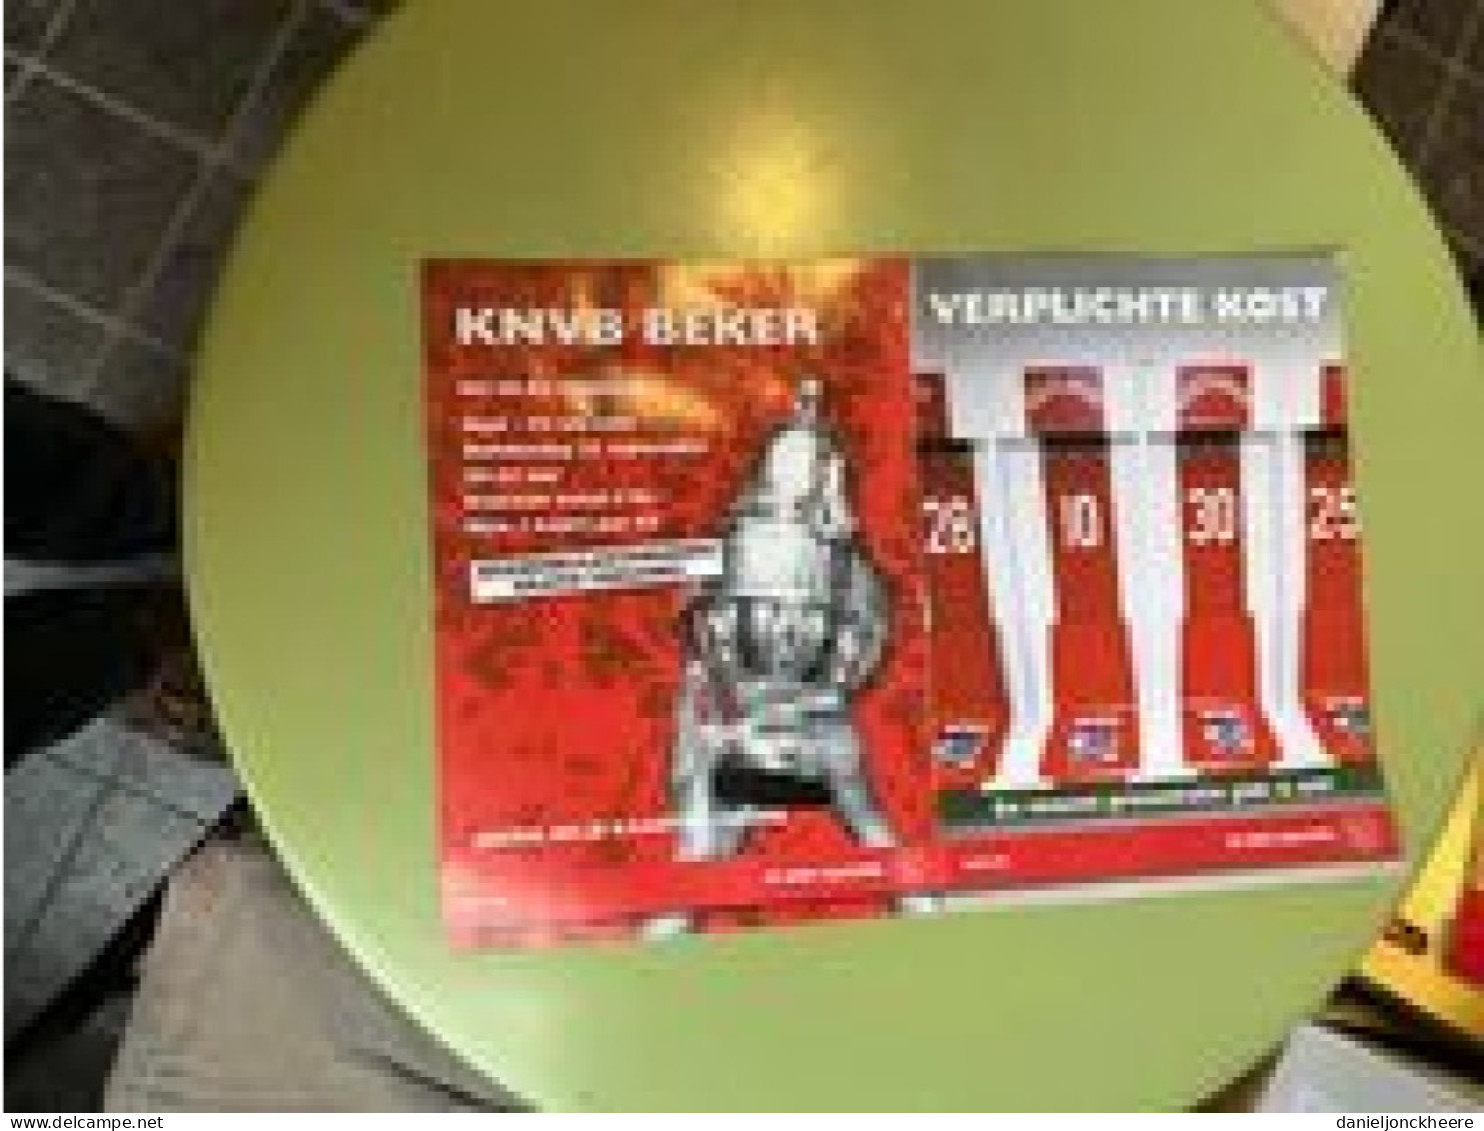 Ajax Foto Kick Off 23 - Habillement, Souvenirs & Autres